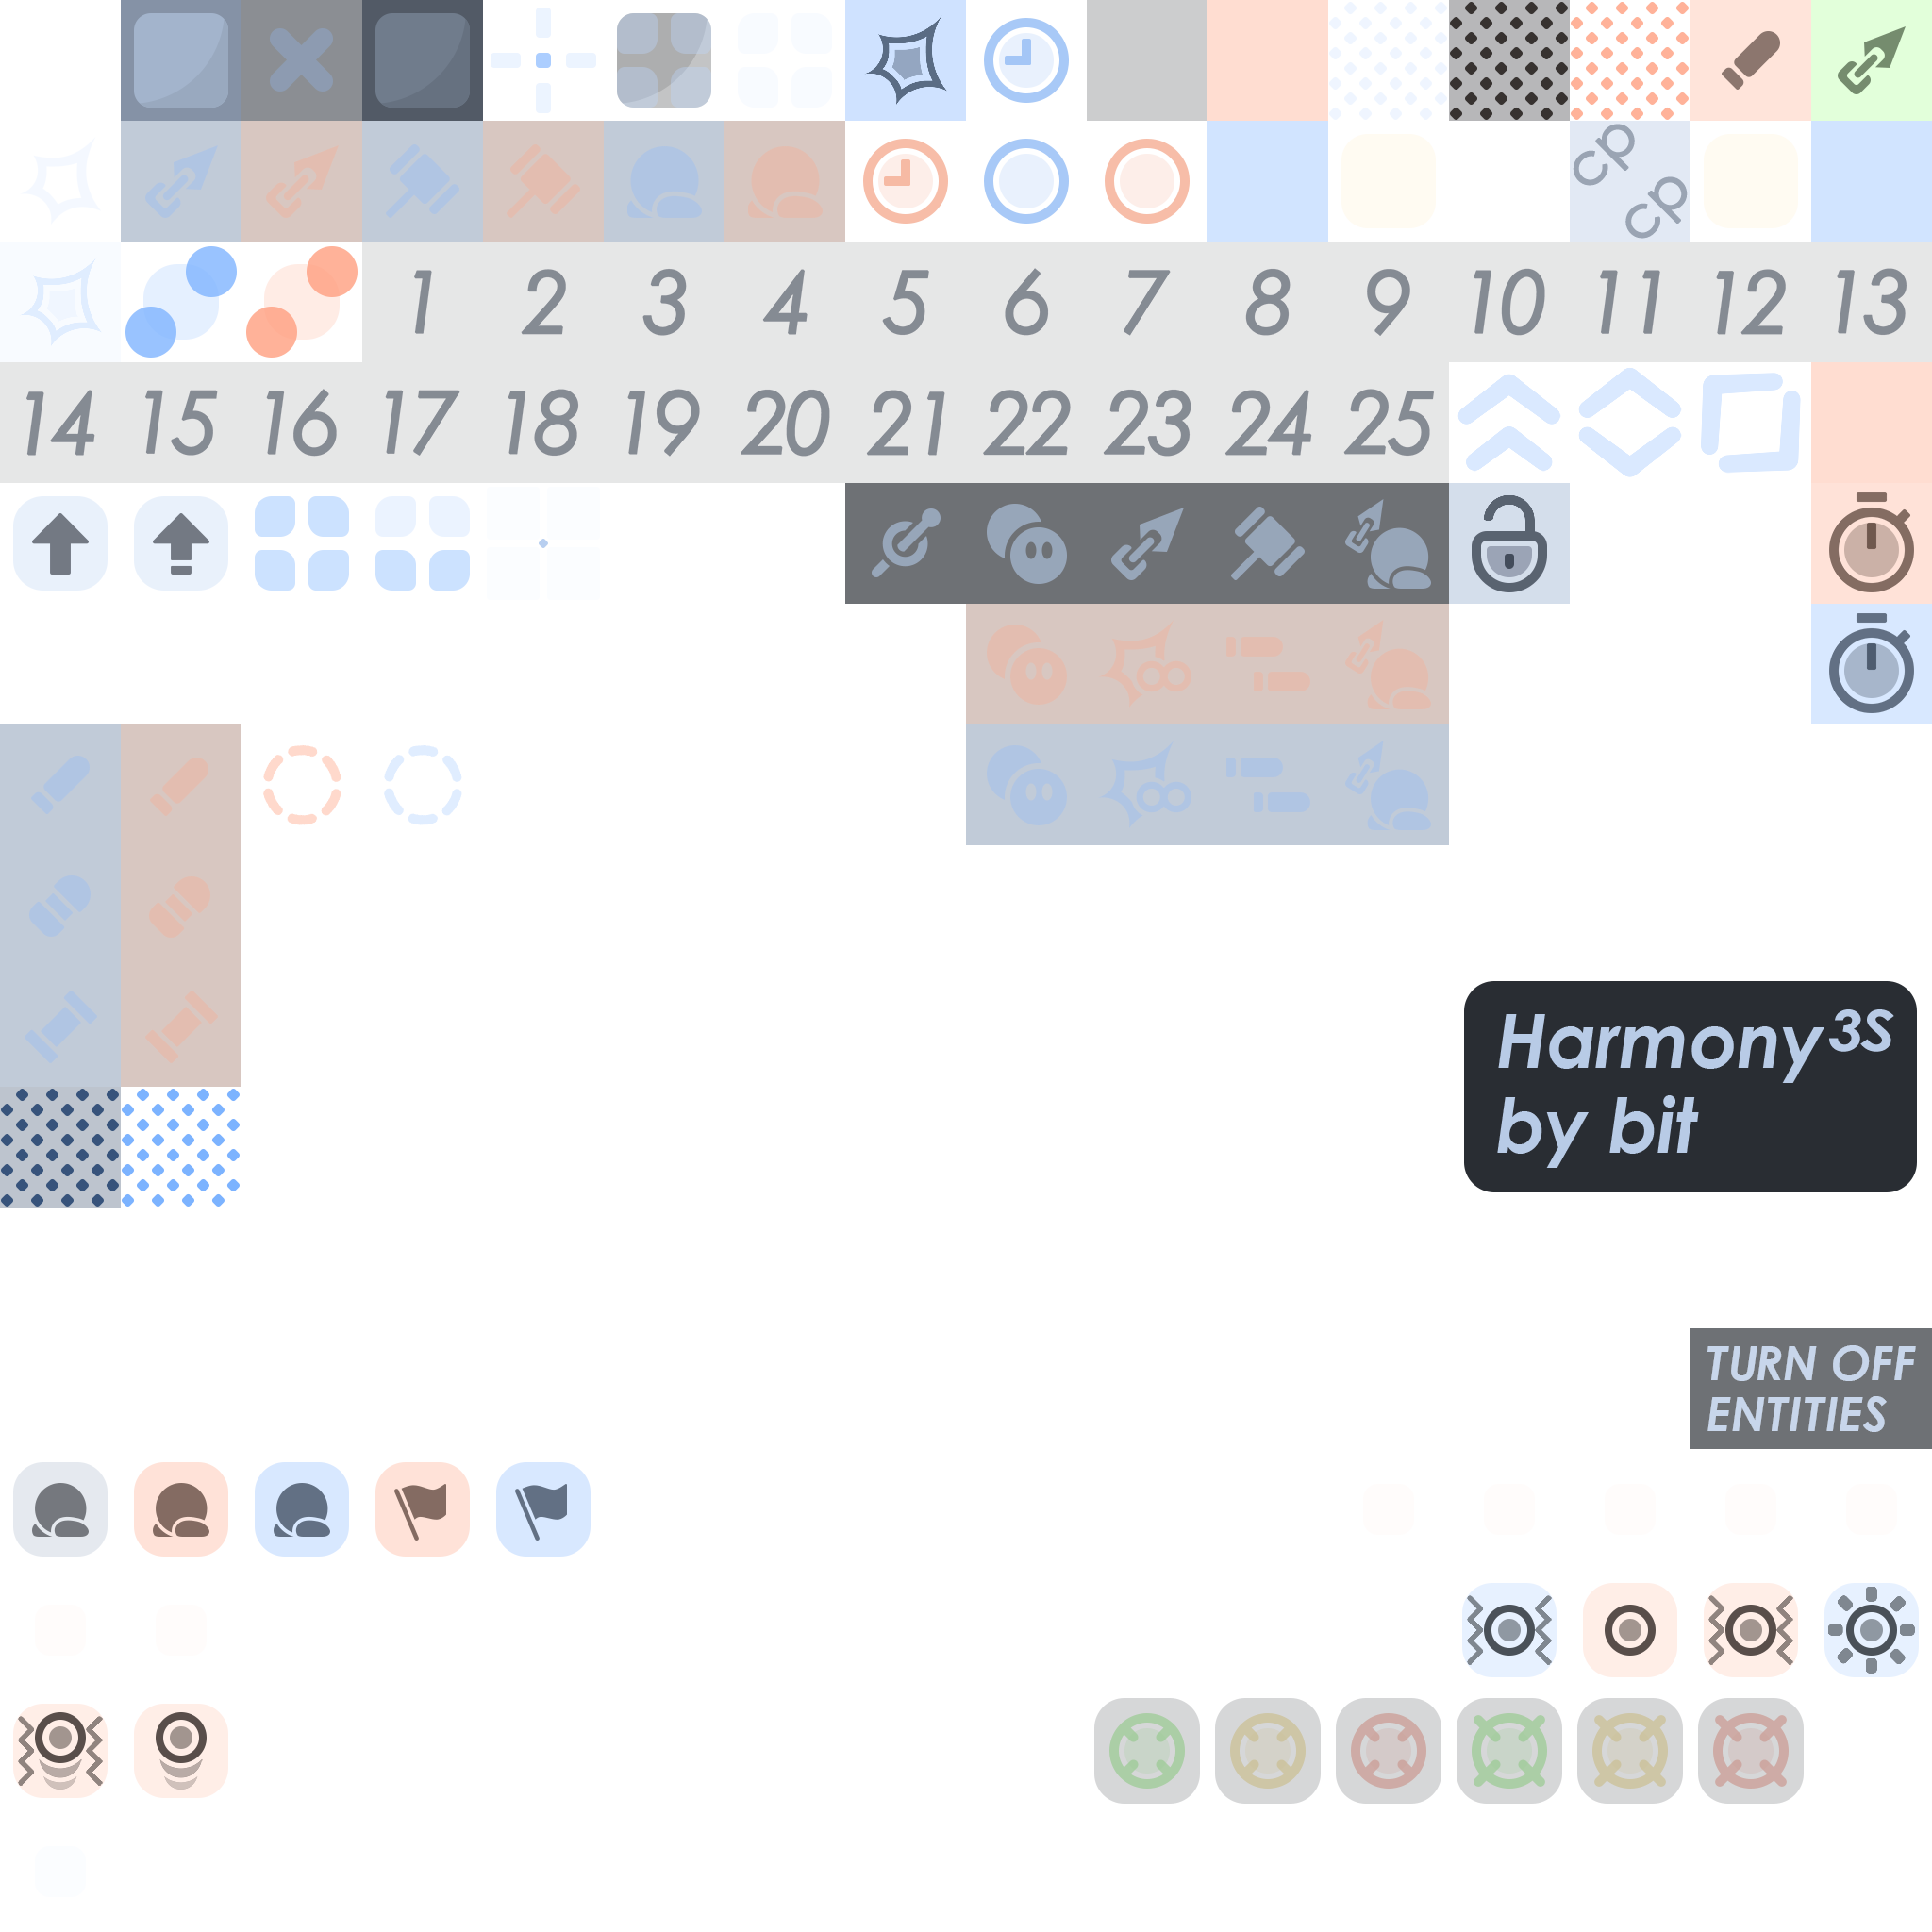 Harmony3S Teeworlds entity